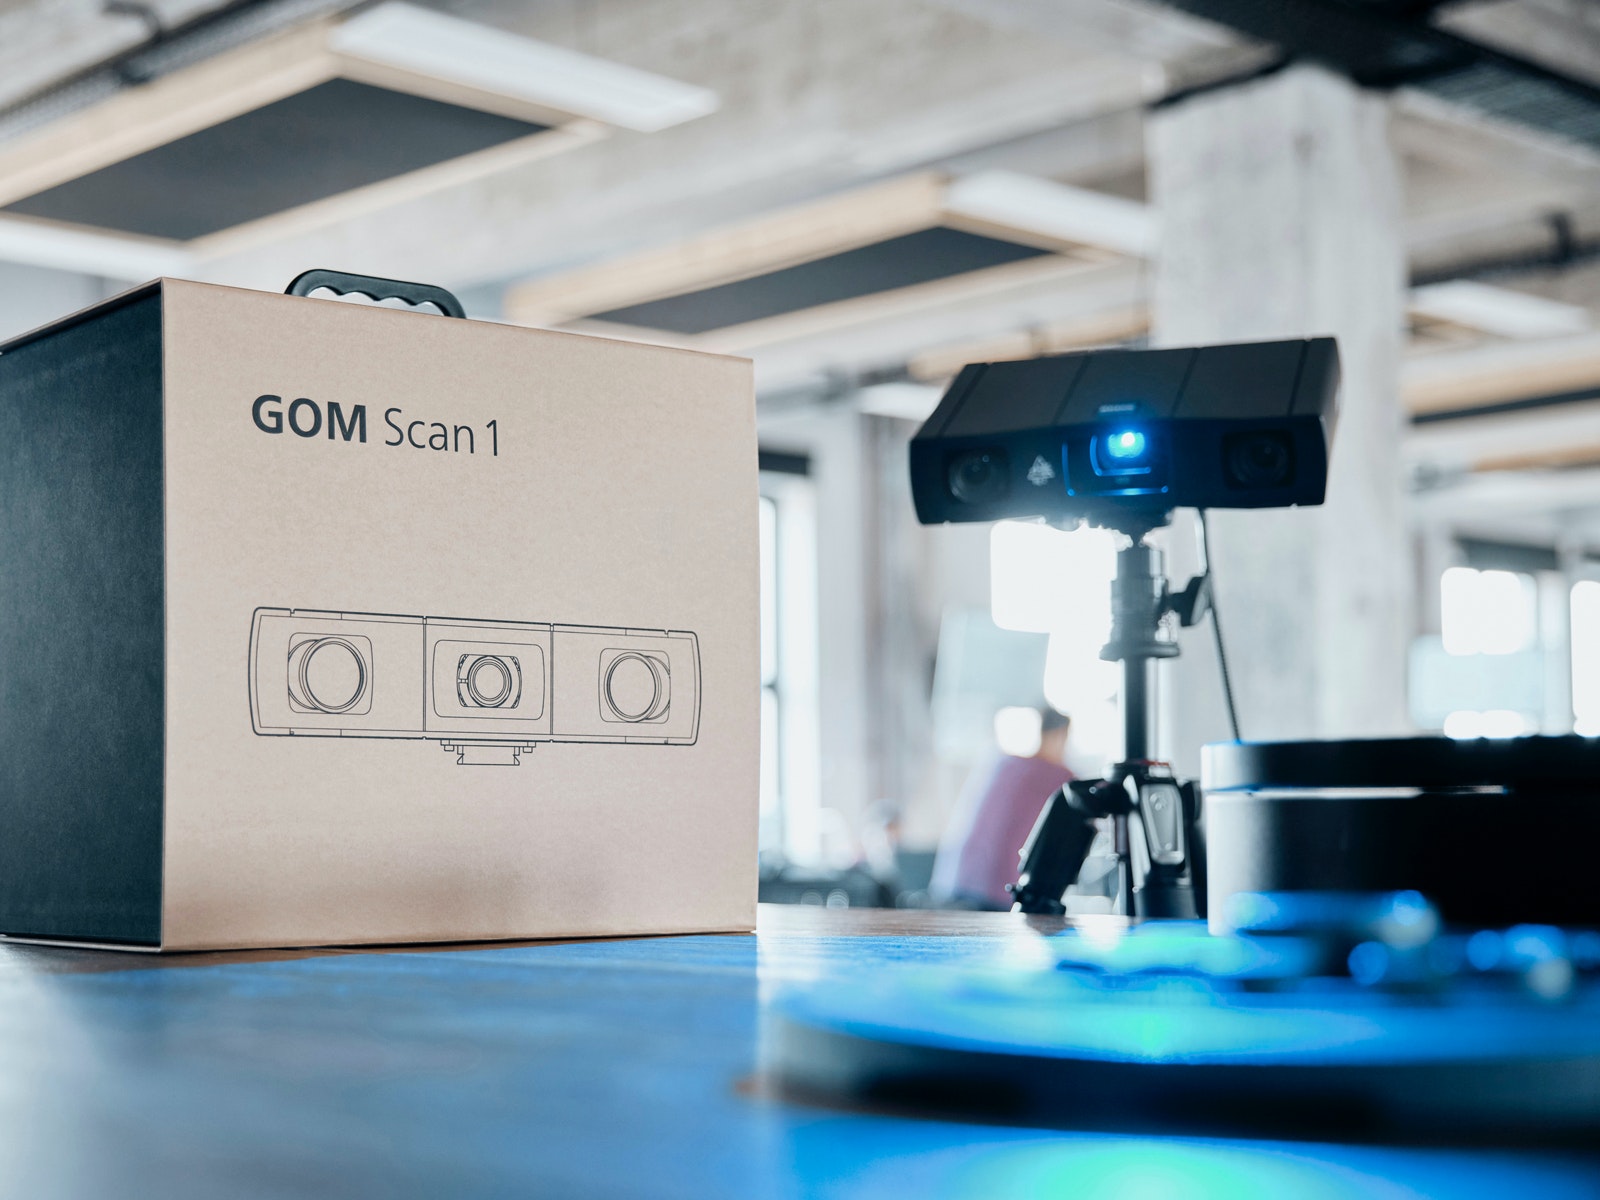 gom-scan1_3d-scanning_unboxing